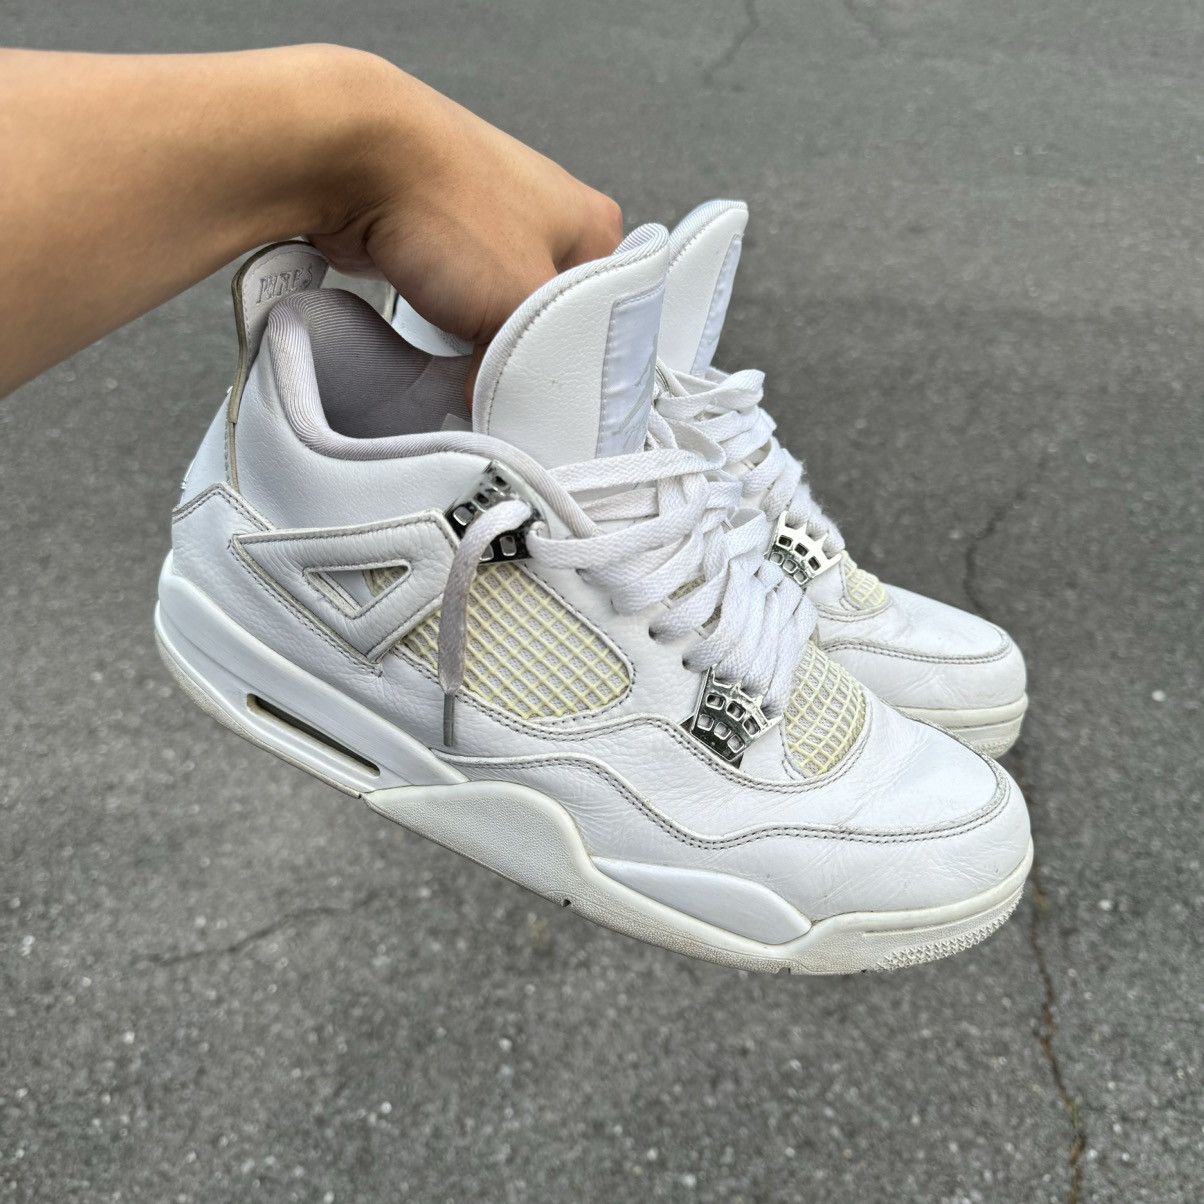 Pre-owned Jordan Nike Jordan 4 Retro Pure Money Shoes In White